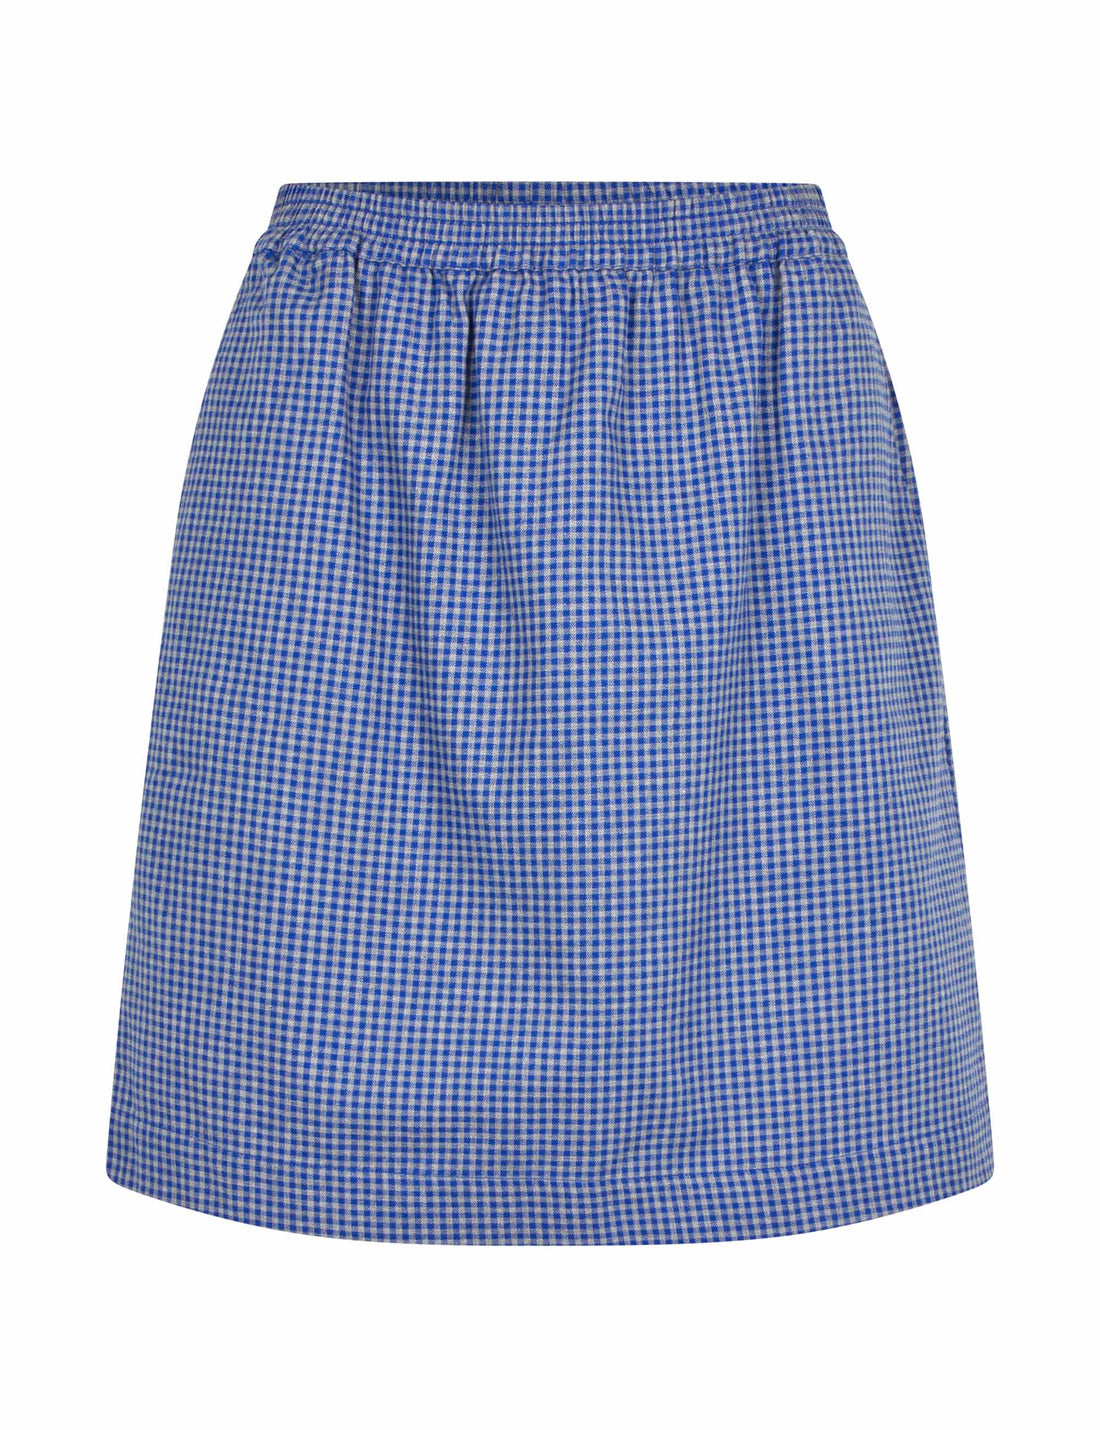 Kamille skirt grey/blue check